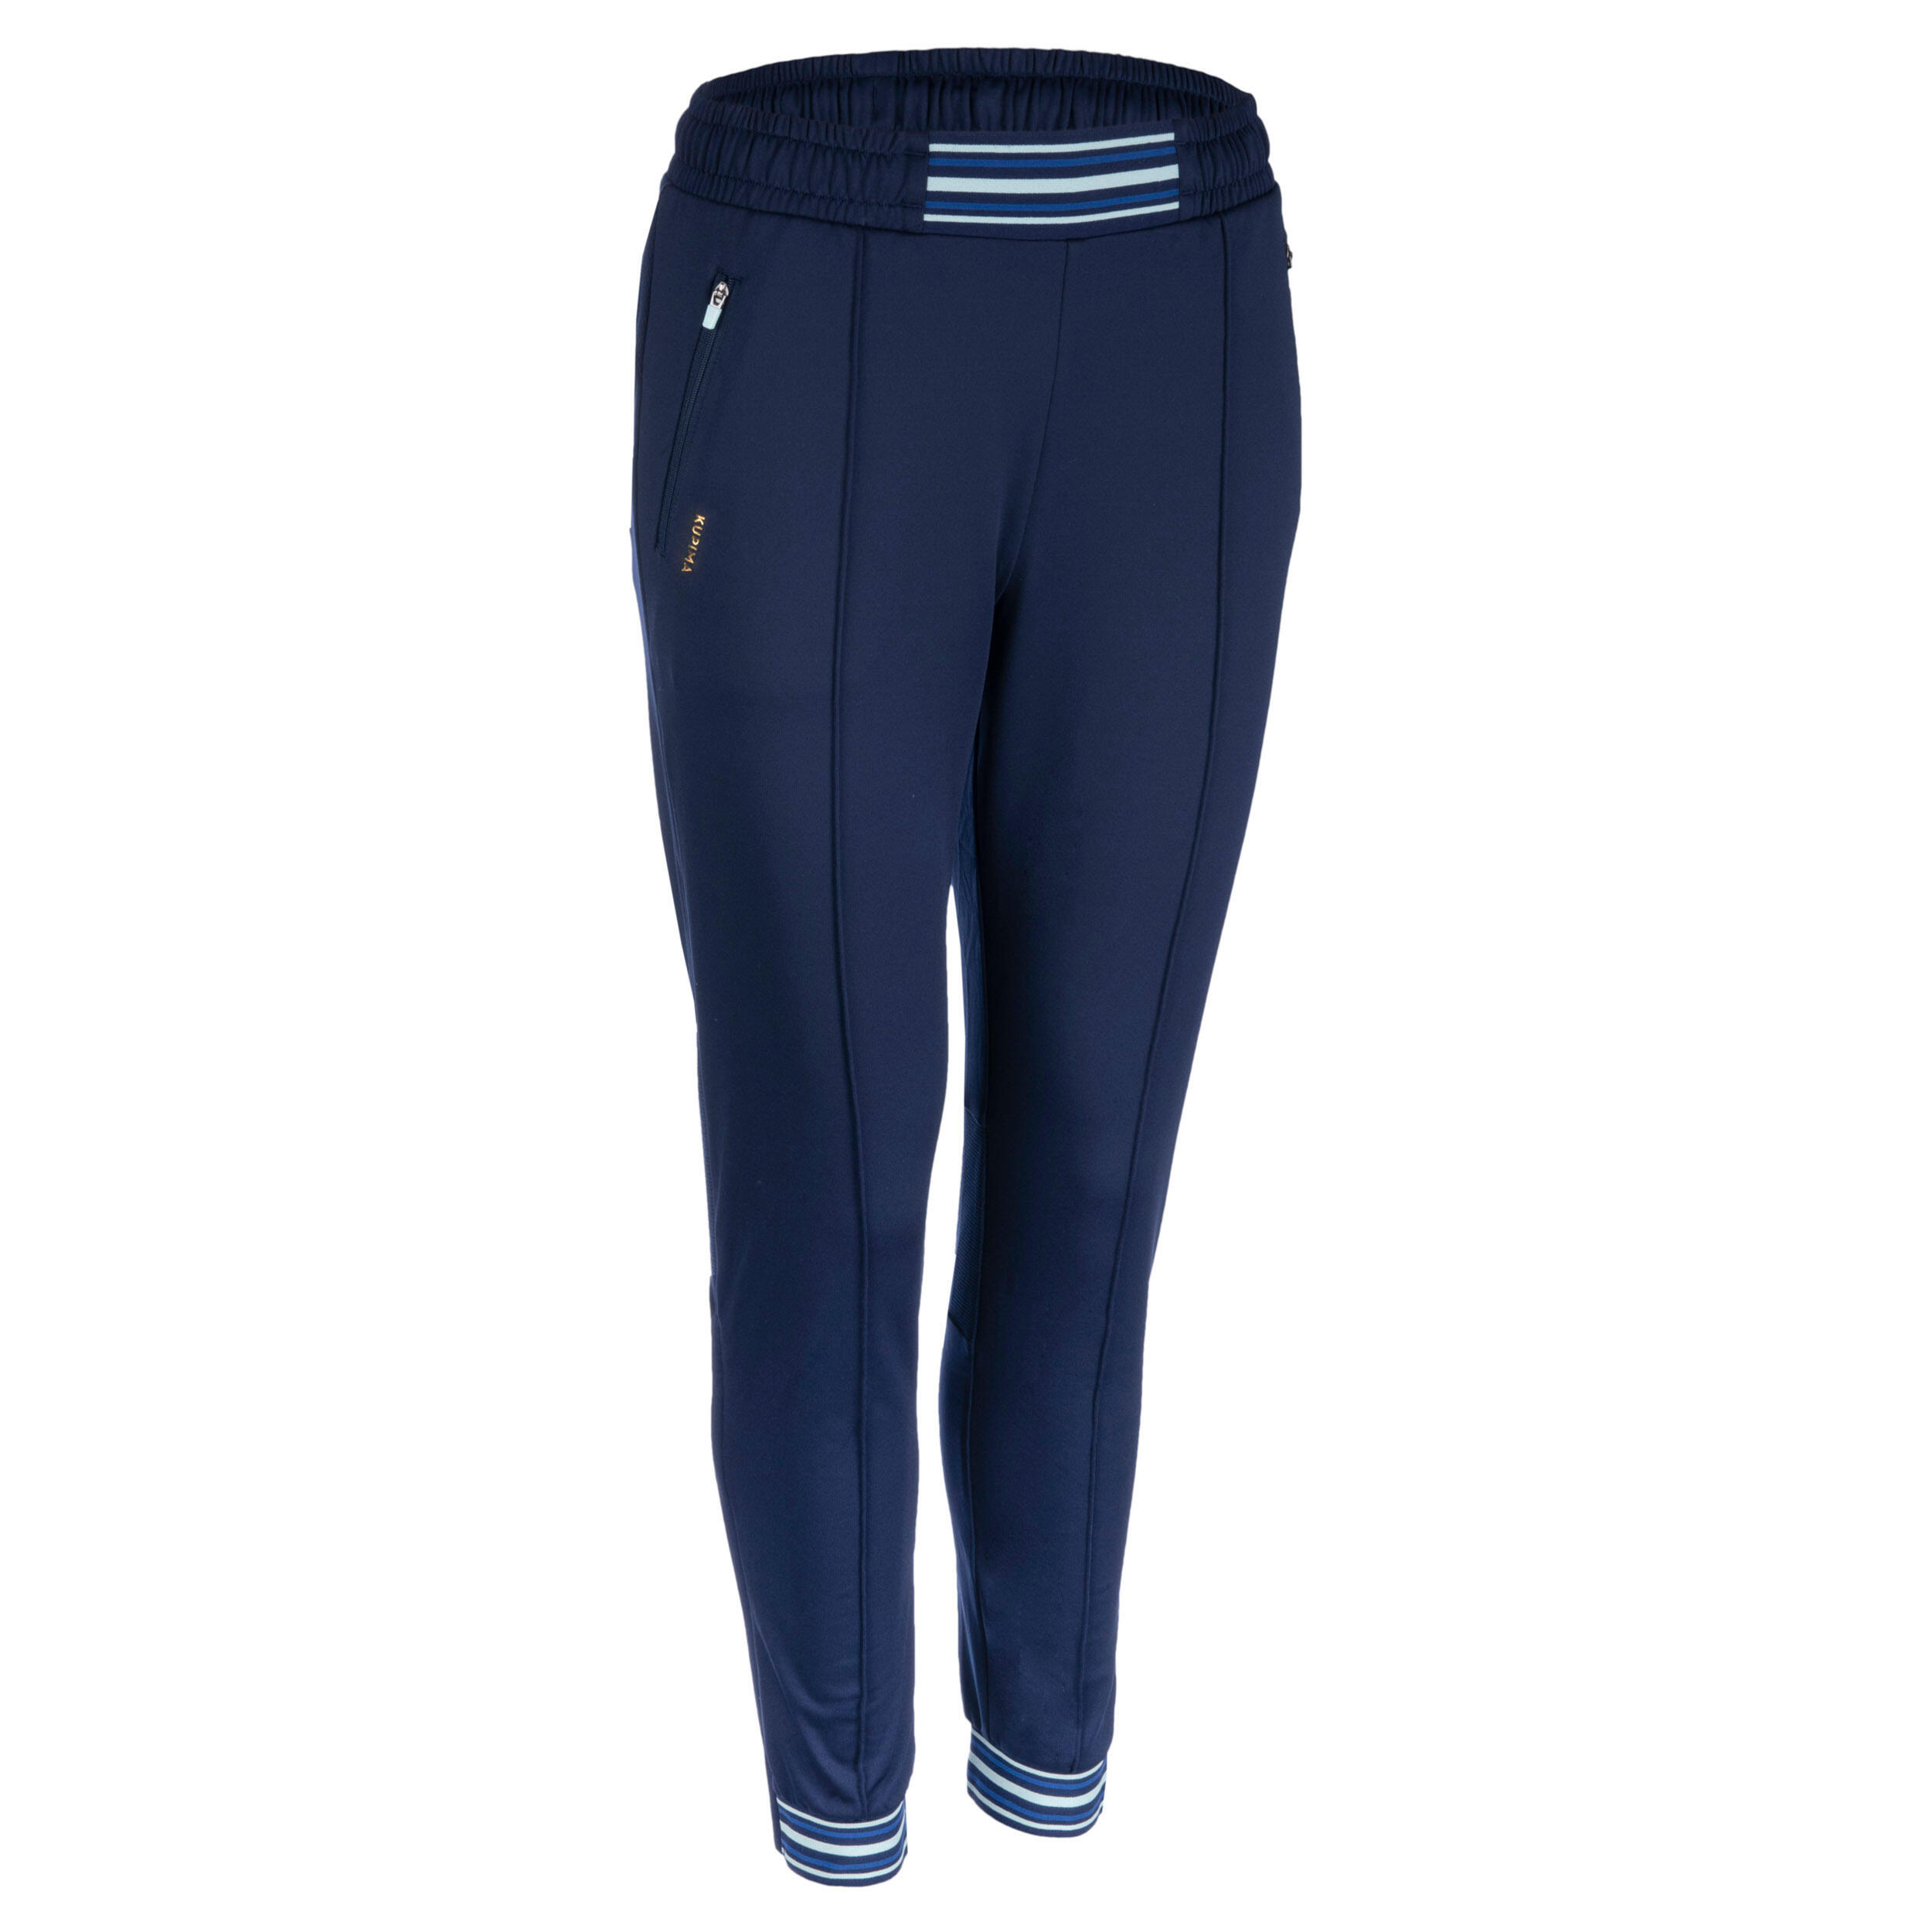 Kalenji Women's Athletics Zipped Trousers - Navy/light Blue